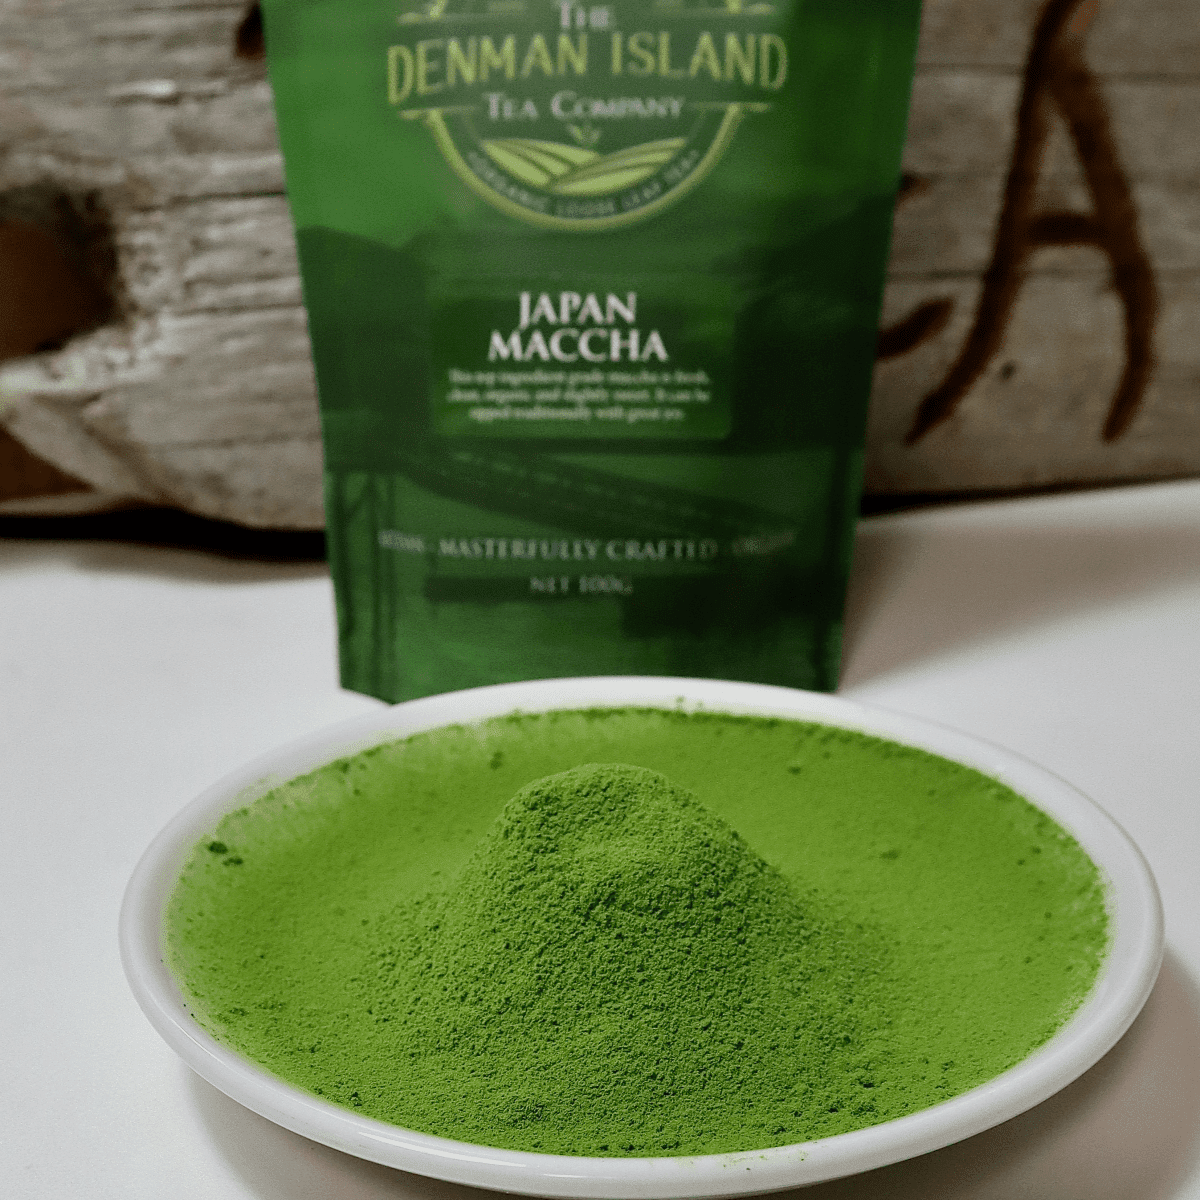 The Denman Island Tea Company